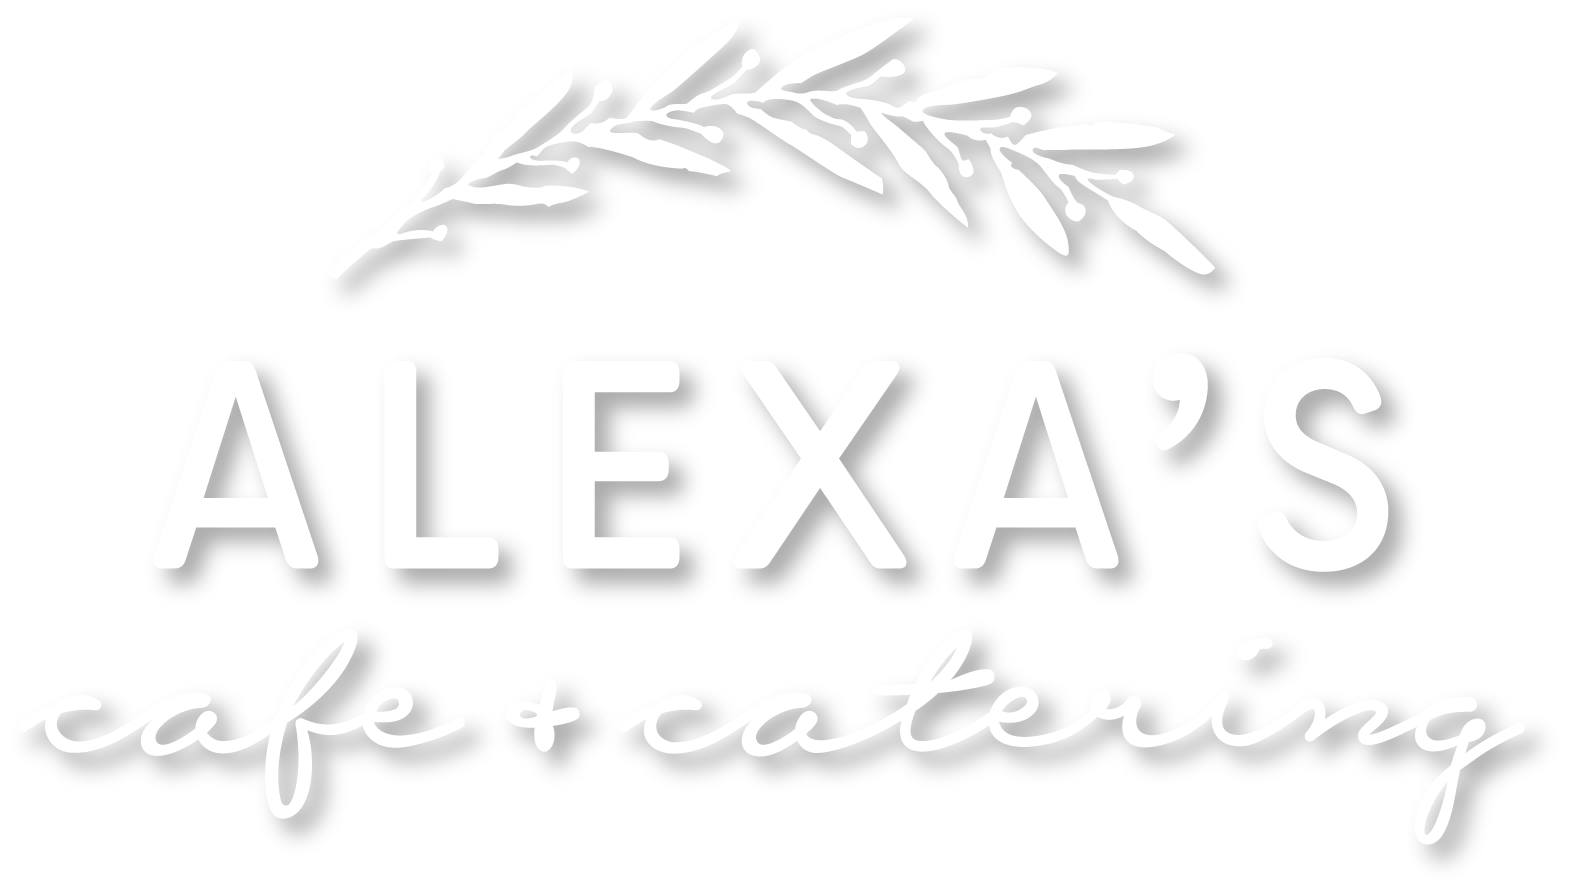 Alexa's Cafe Bothell